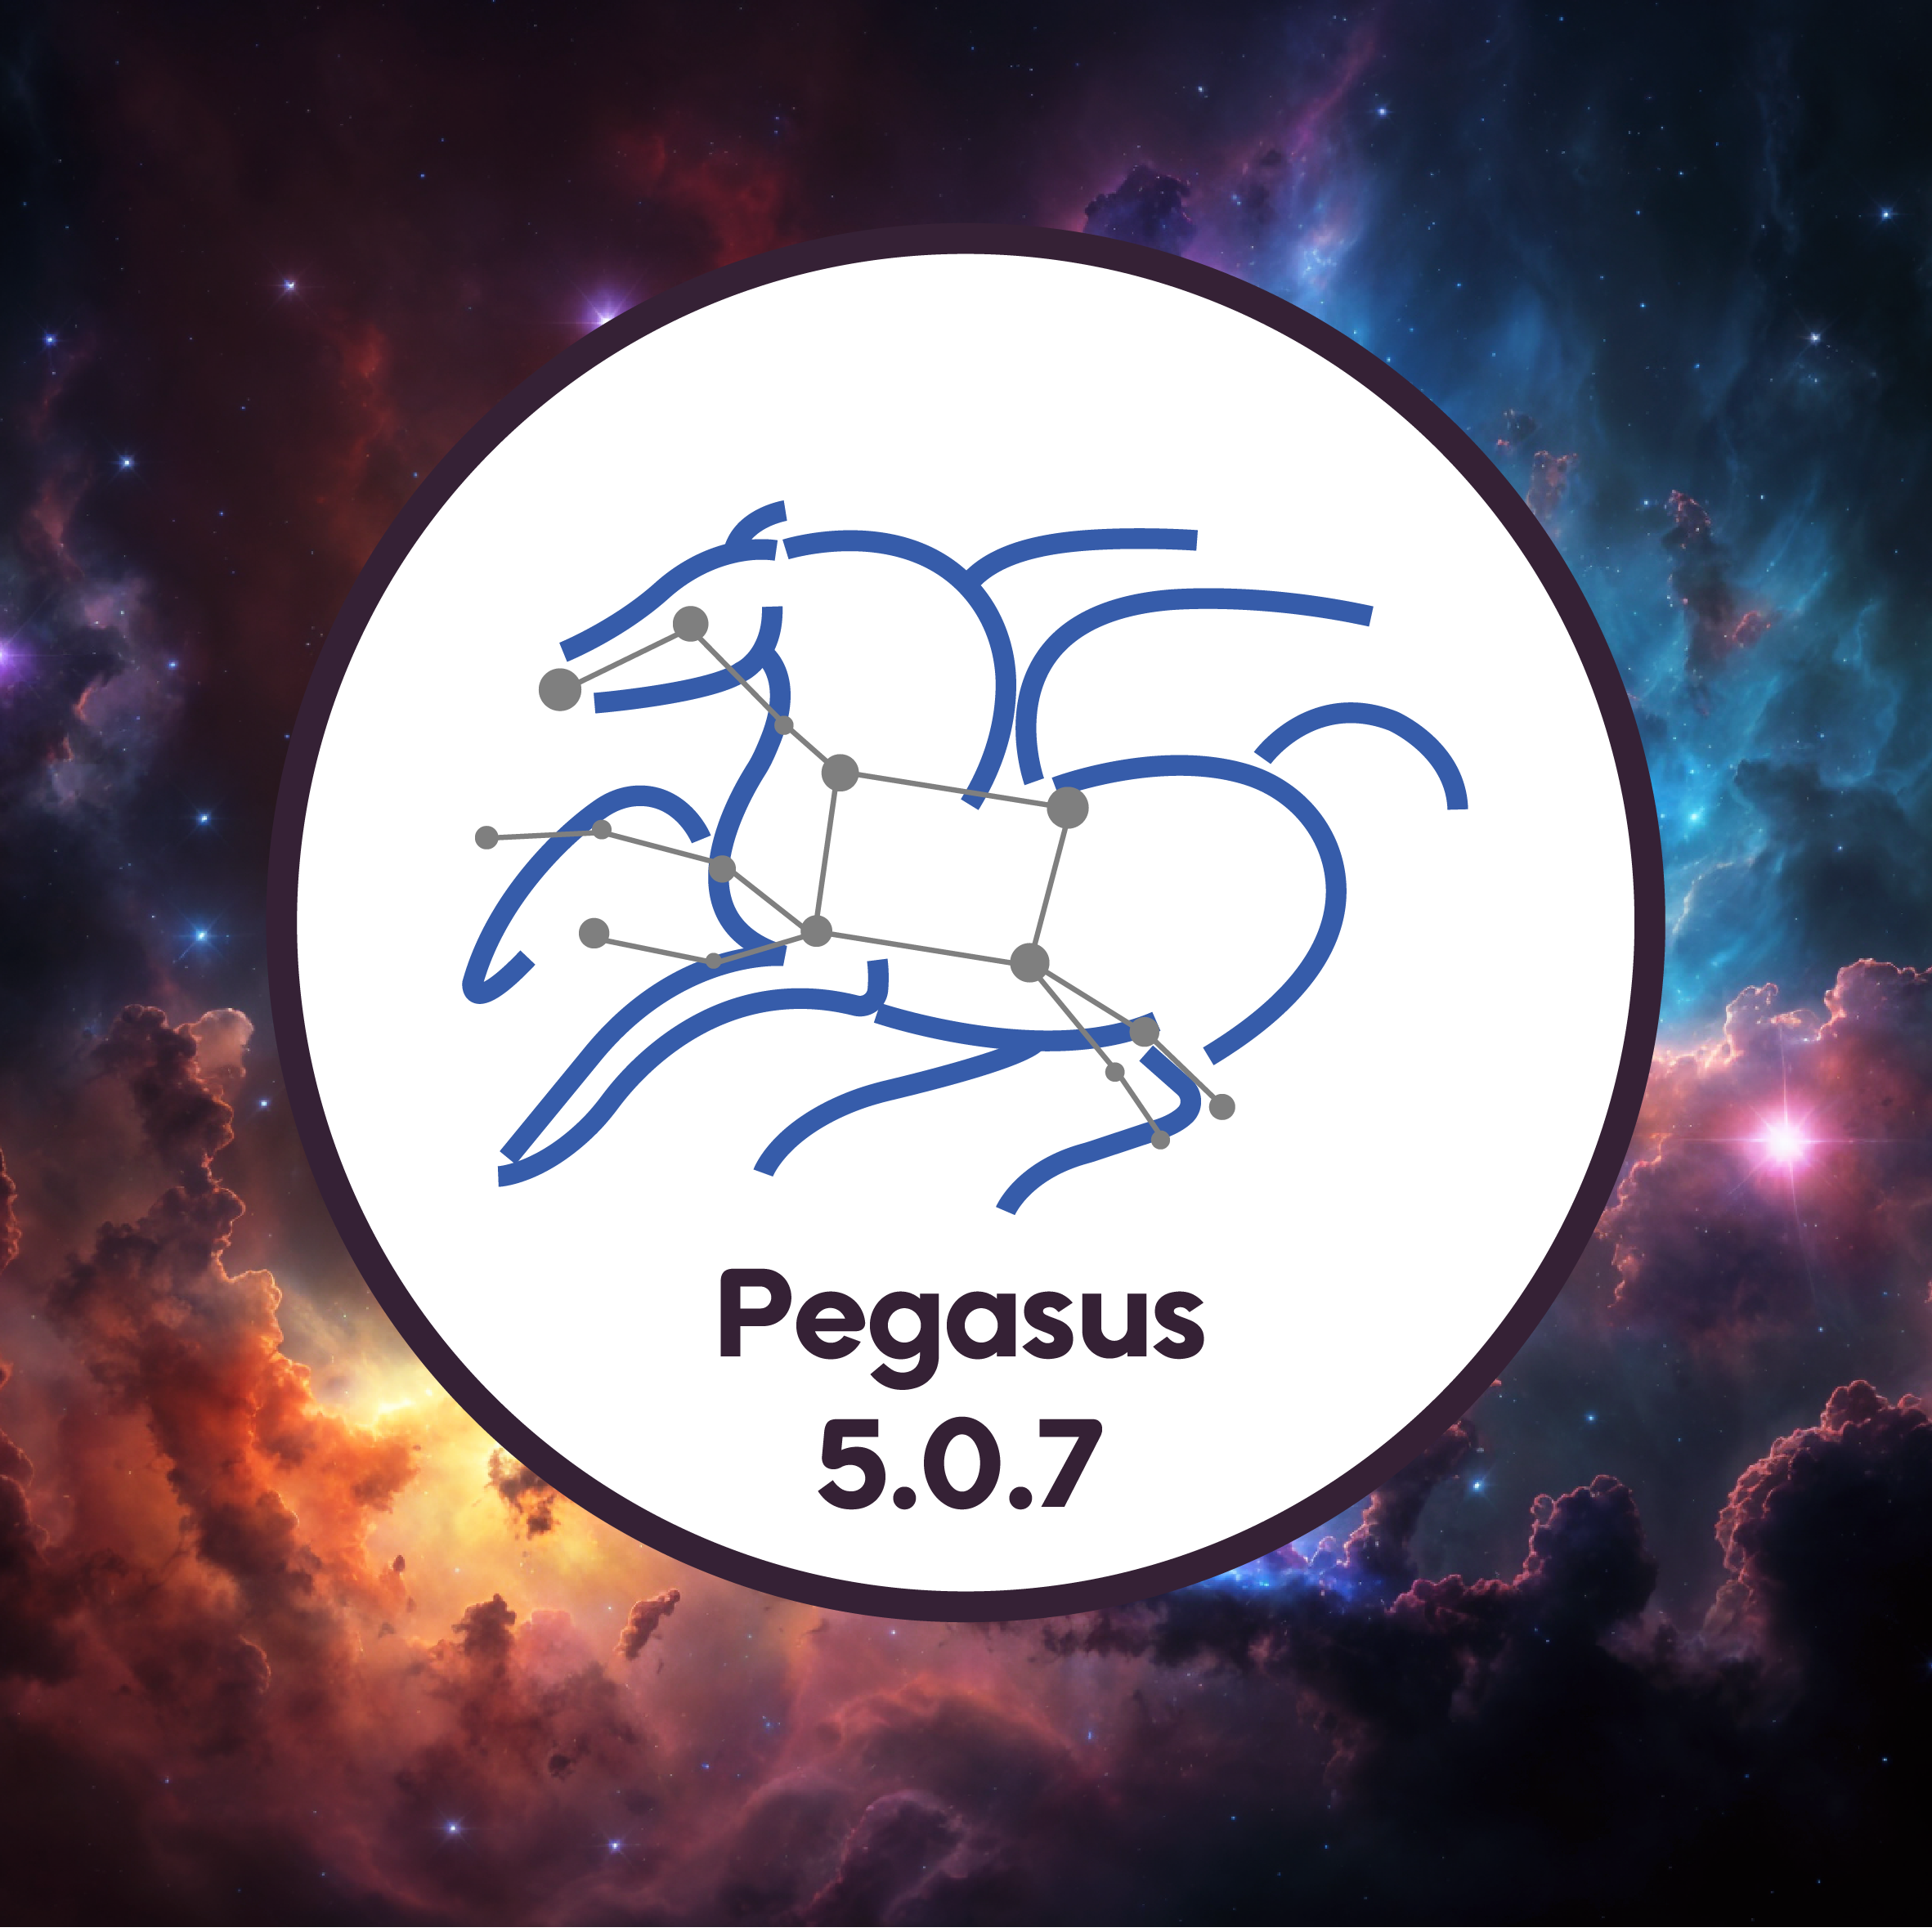 Pegasus 5.0.7 Release Image